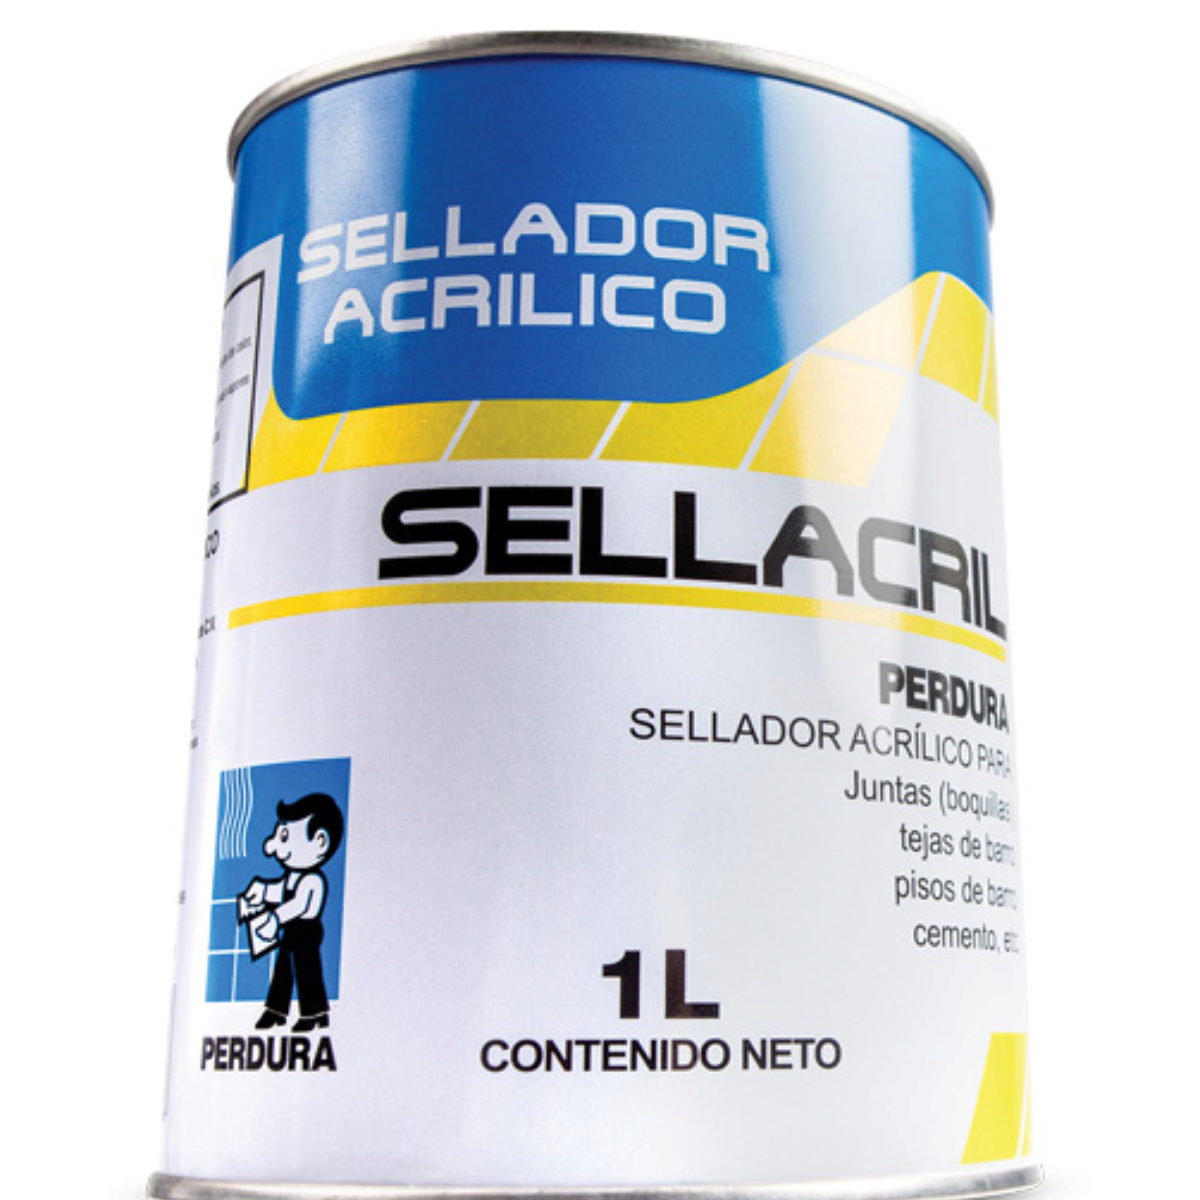 Sellacril 0.5 Lto